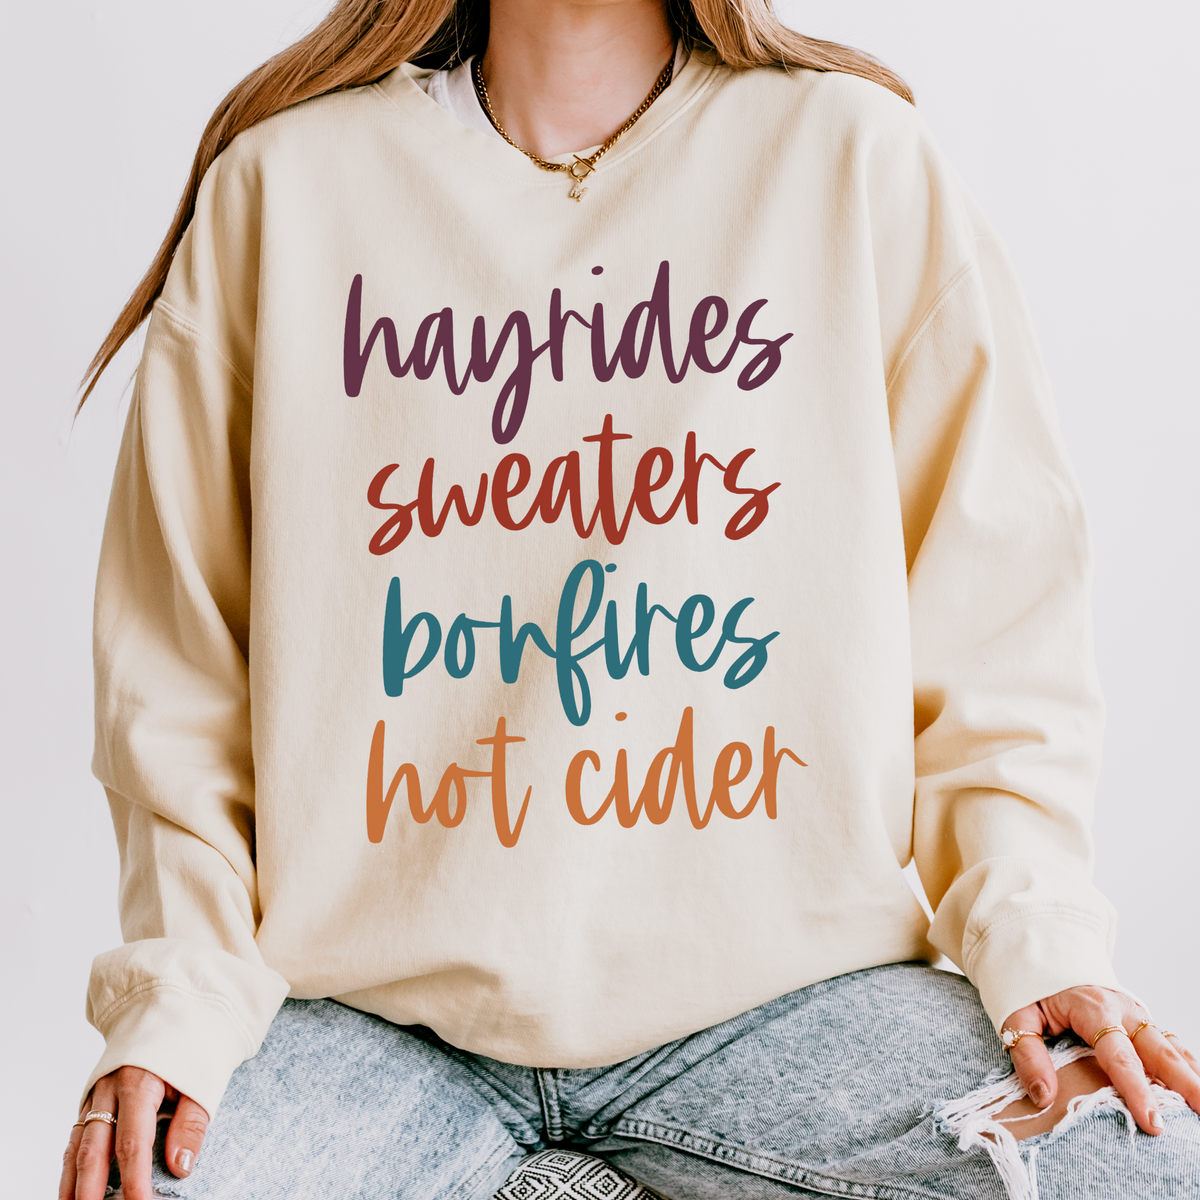 Hayrides, Sweaters, Bonfires, Hot Cider Script in Fall Tones Digital Download, PNG